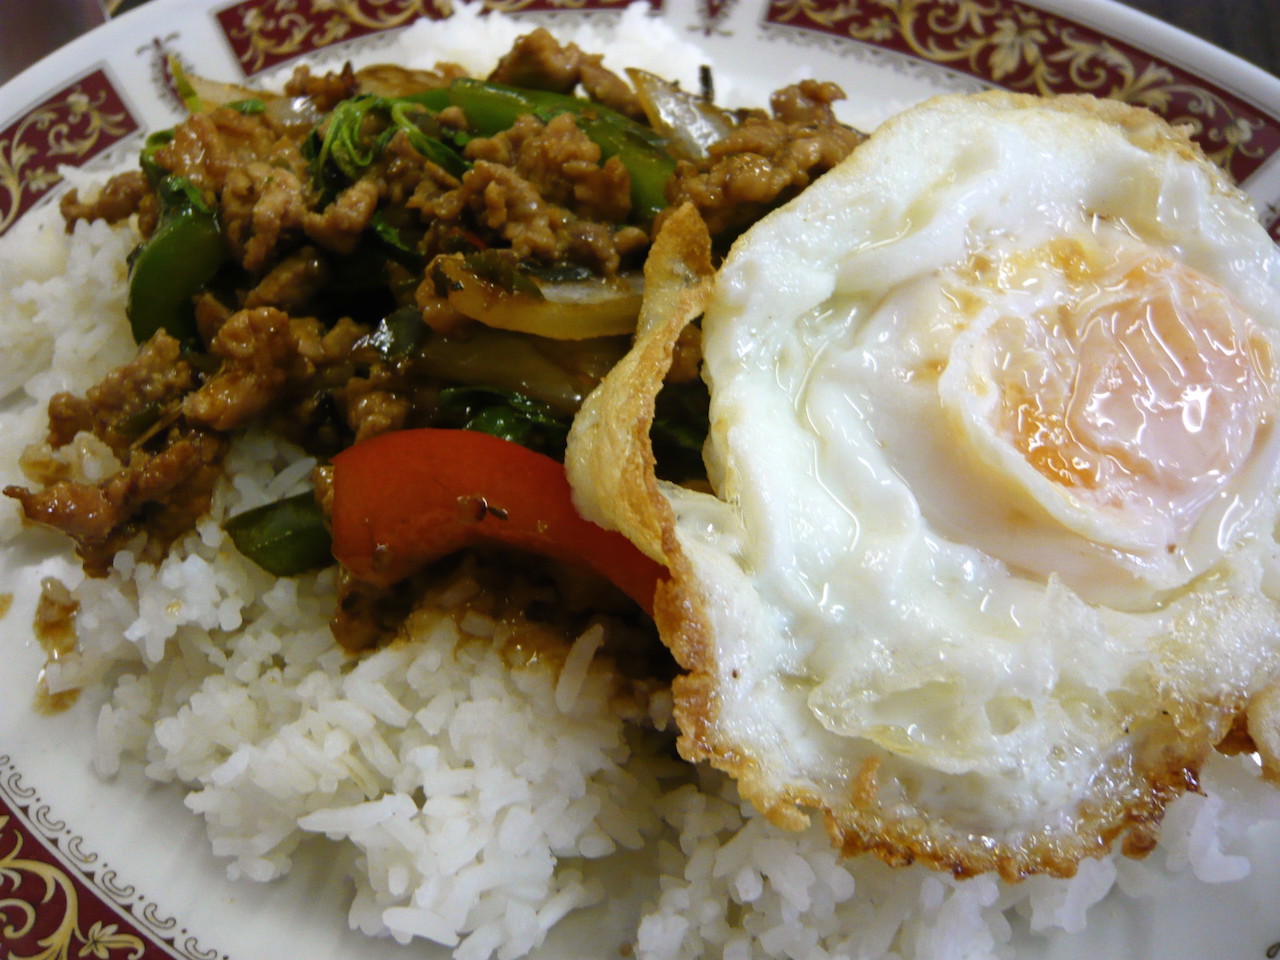 Thai food: Pad Kra Pao Moo, pork and holy basil stir-fry.